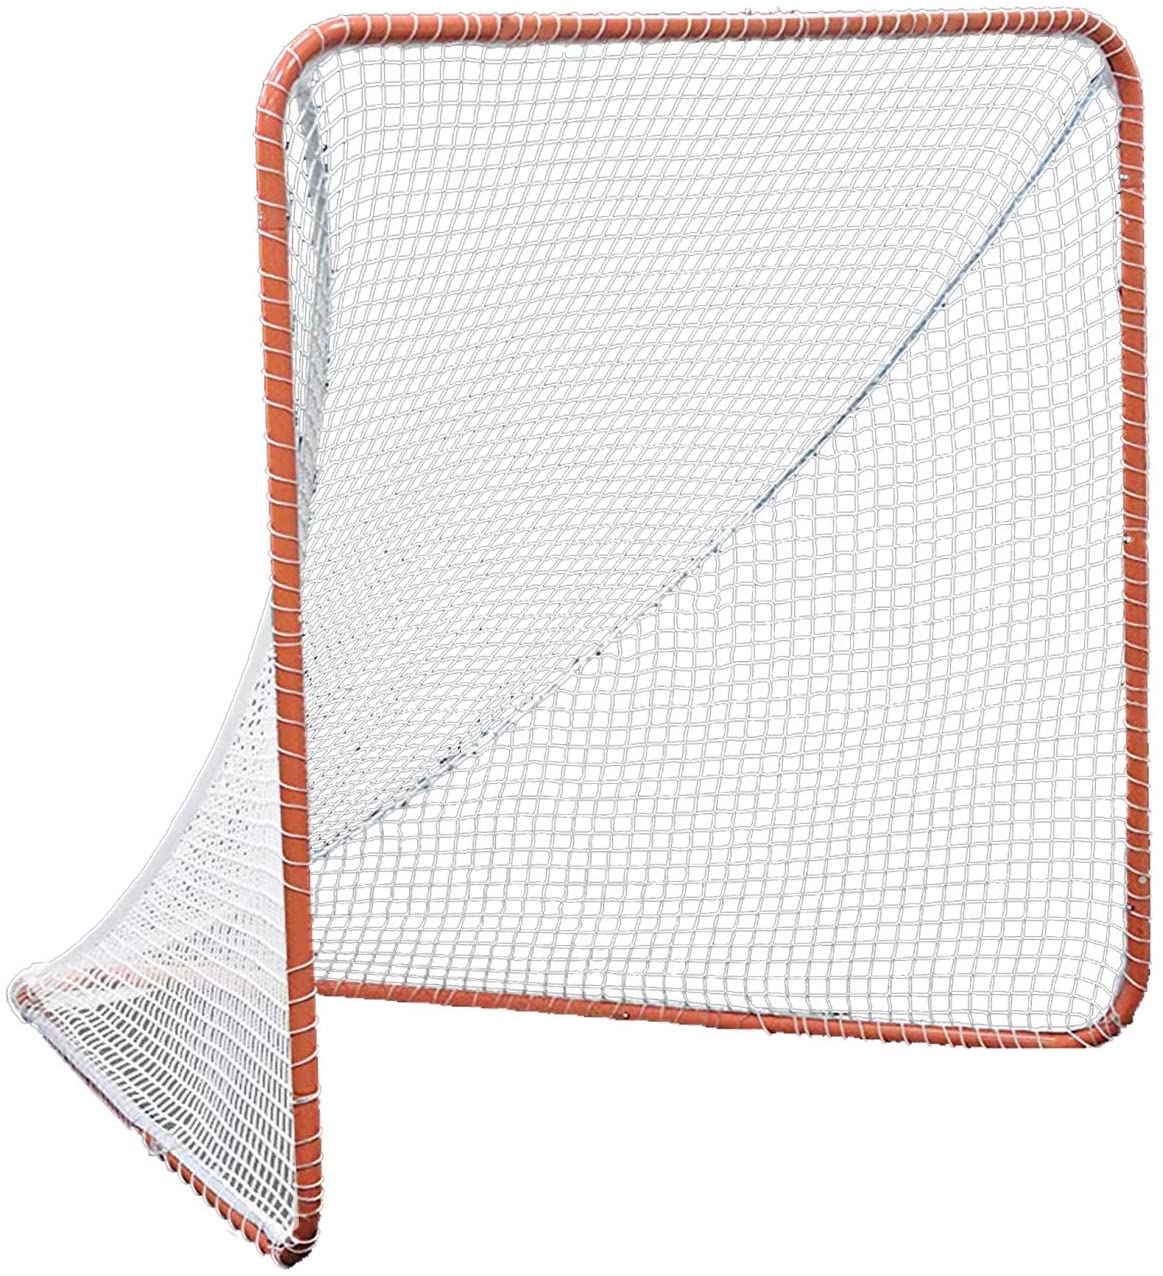 Lacrosse Net with Steel Frame Portable Lacrosse Goal Collegiate Lacrosse Goal | 7'X6'X6' Size